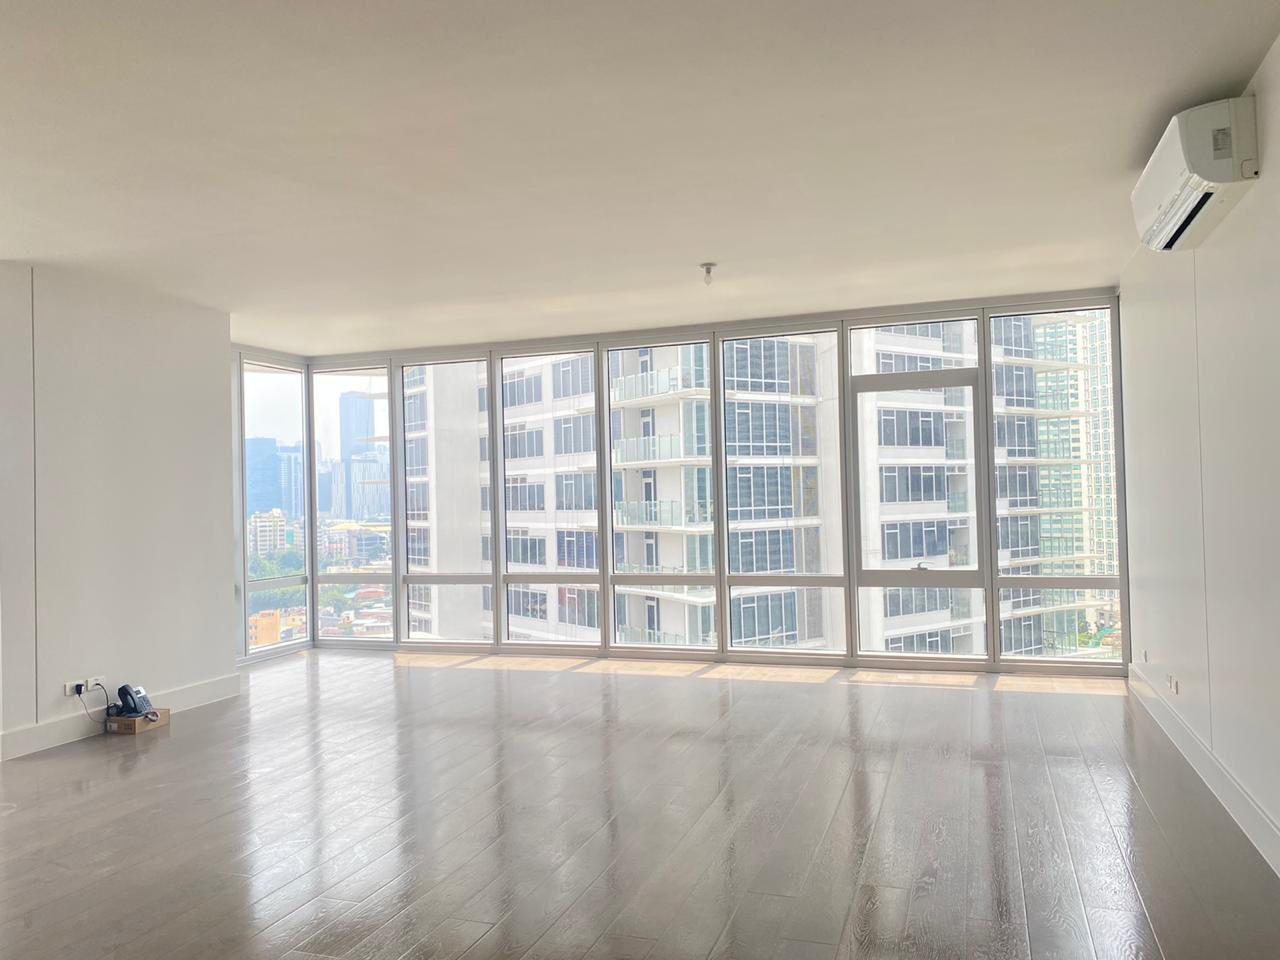 condominium for sale in Makati City in the Philippines